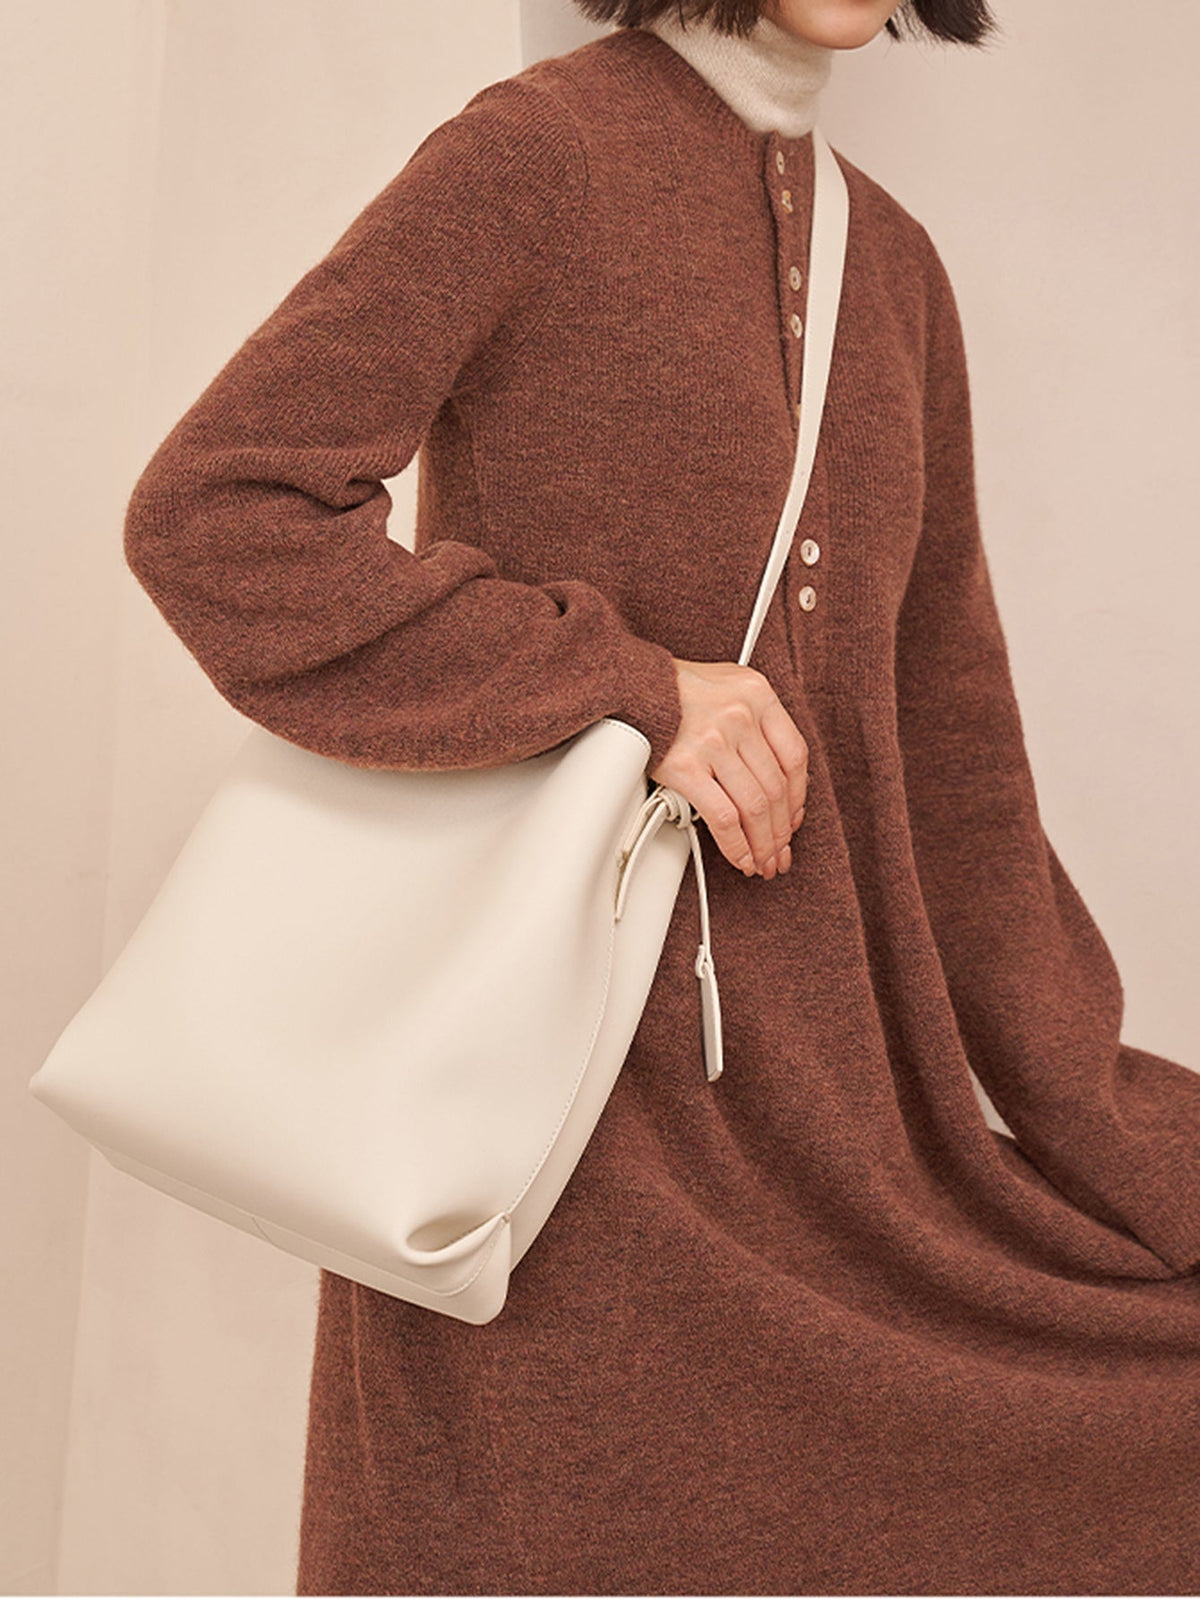 Women Vintage Leather Handbags One Shoulder Bags Sai Feel